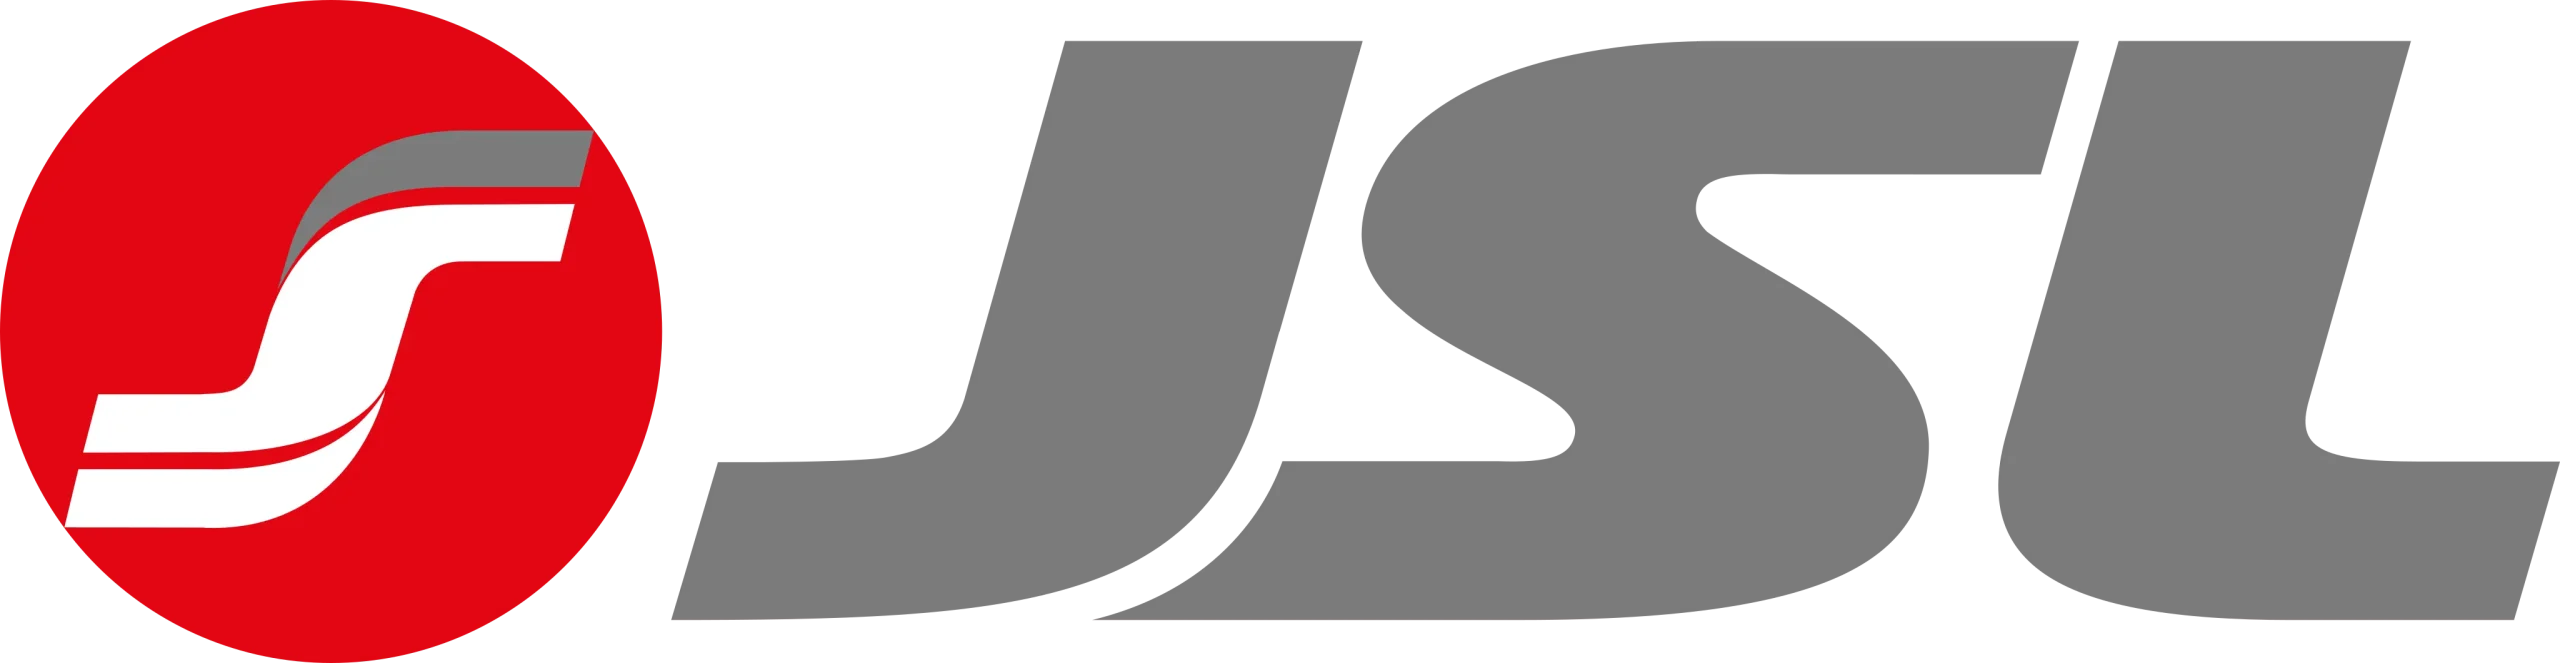 jsl-logo-1